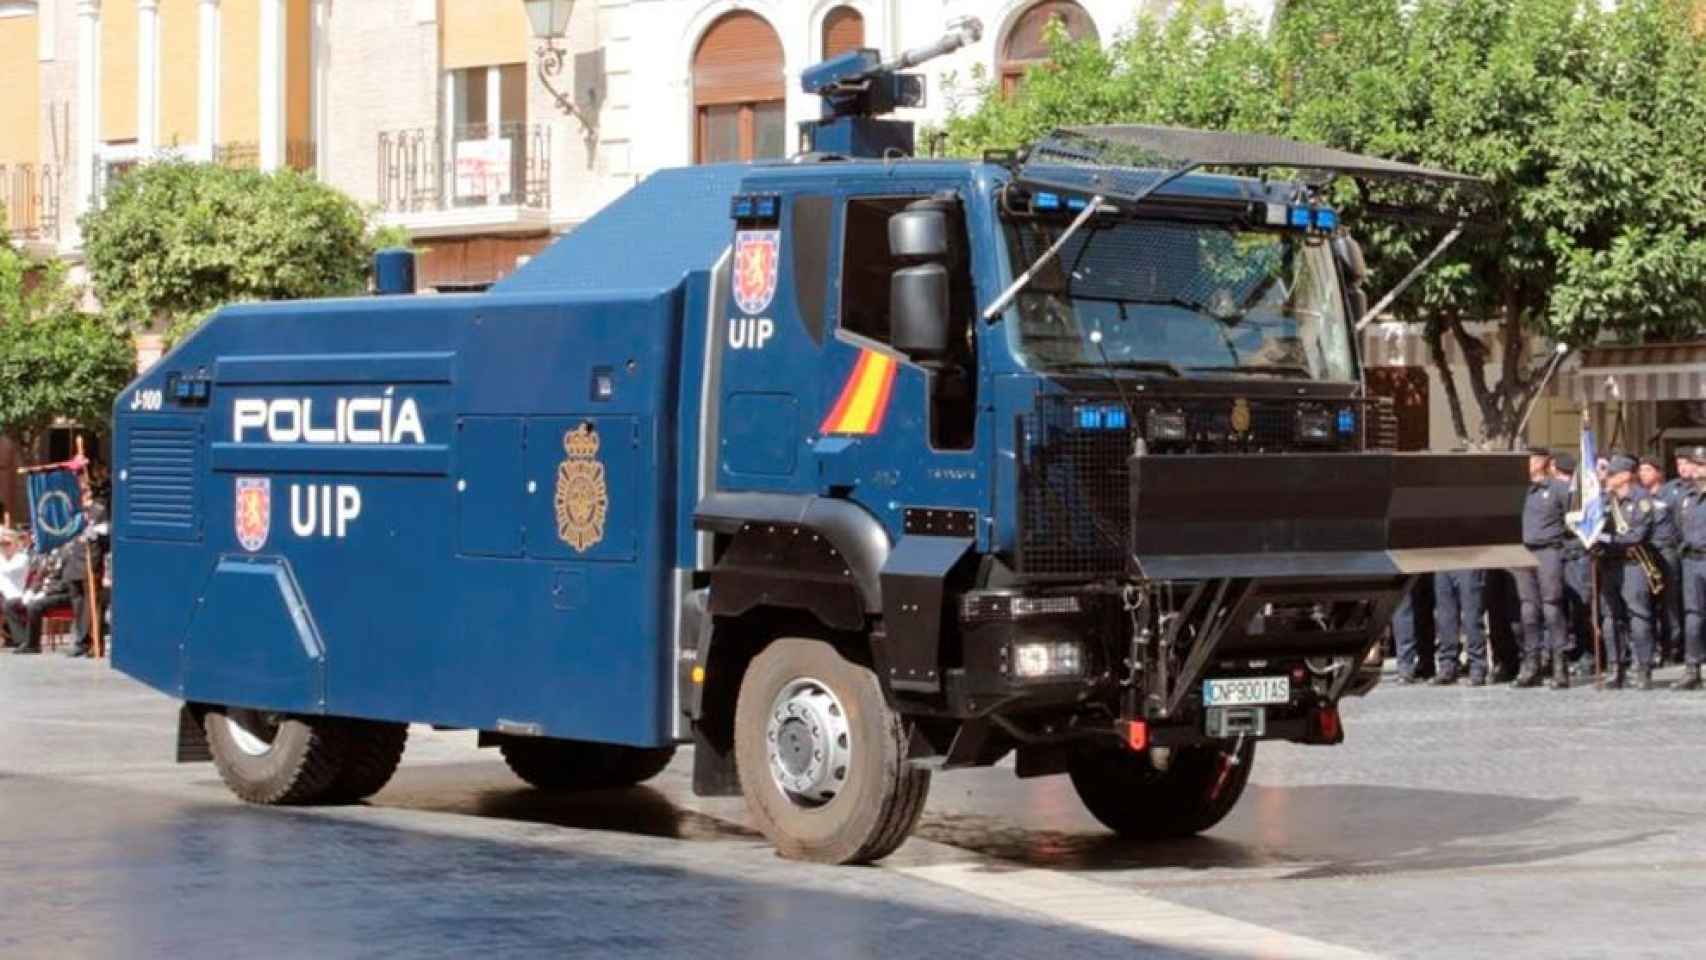 Tanqueta de agua enviada por la Policía Nacional a Cataluña.